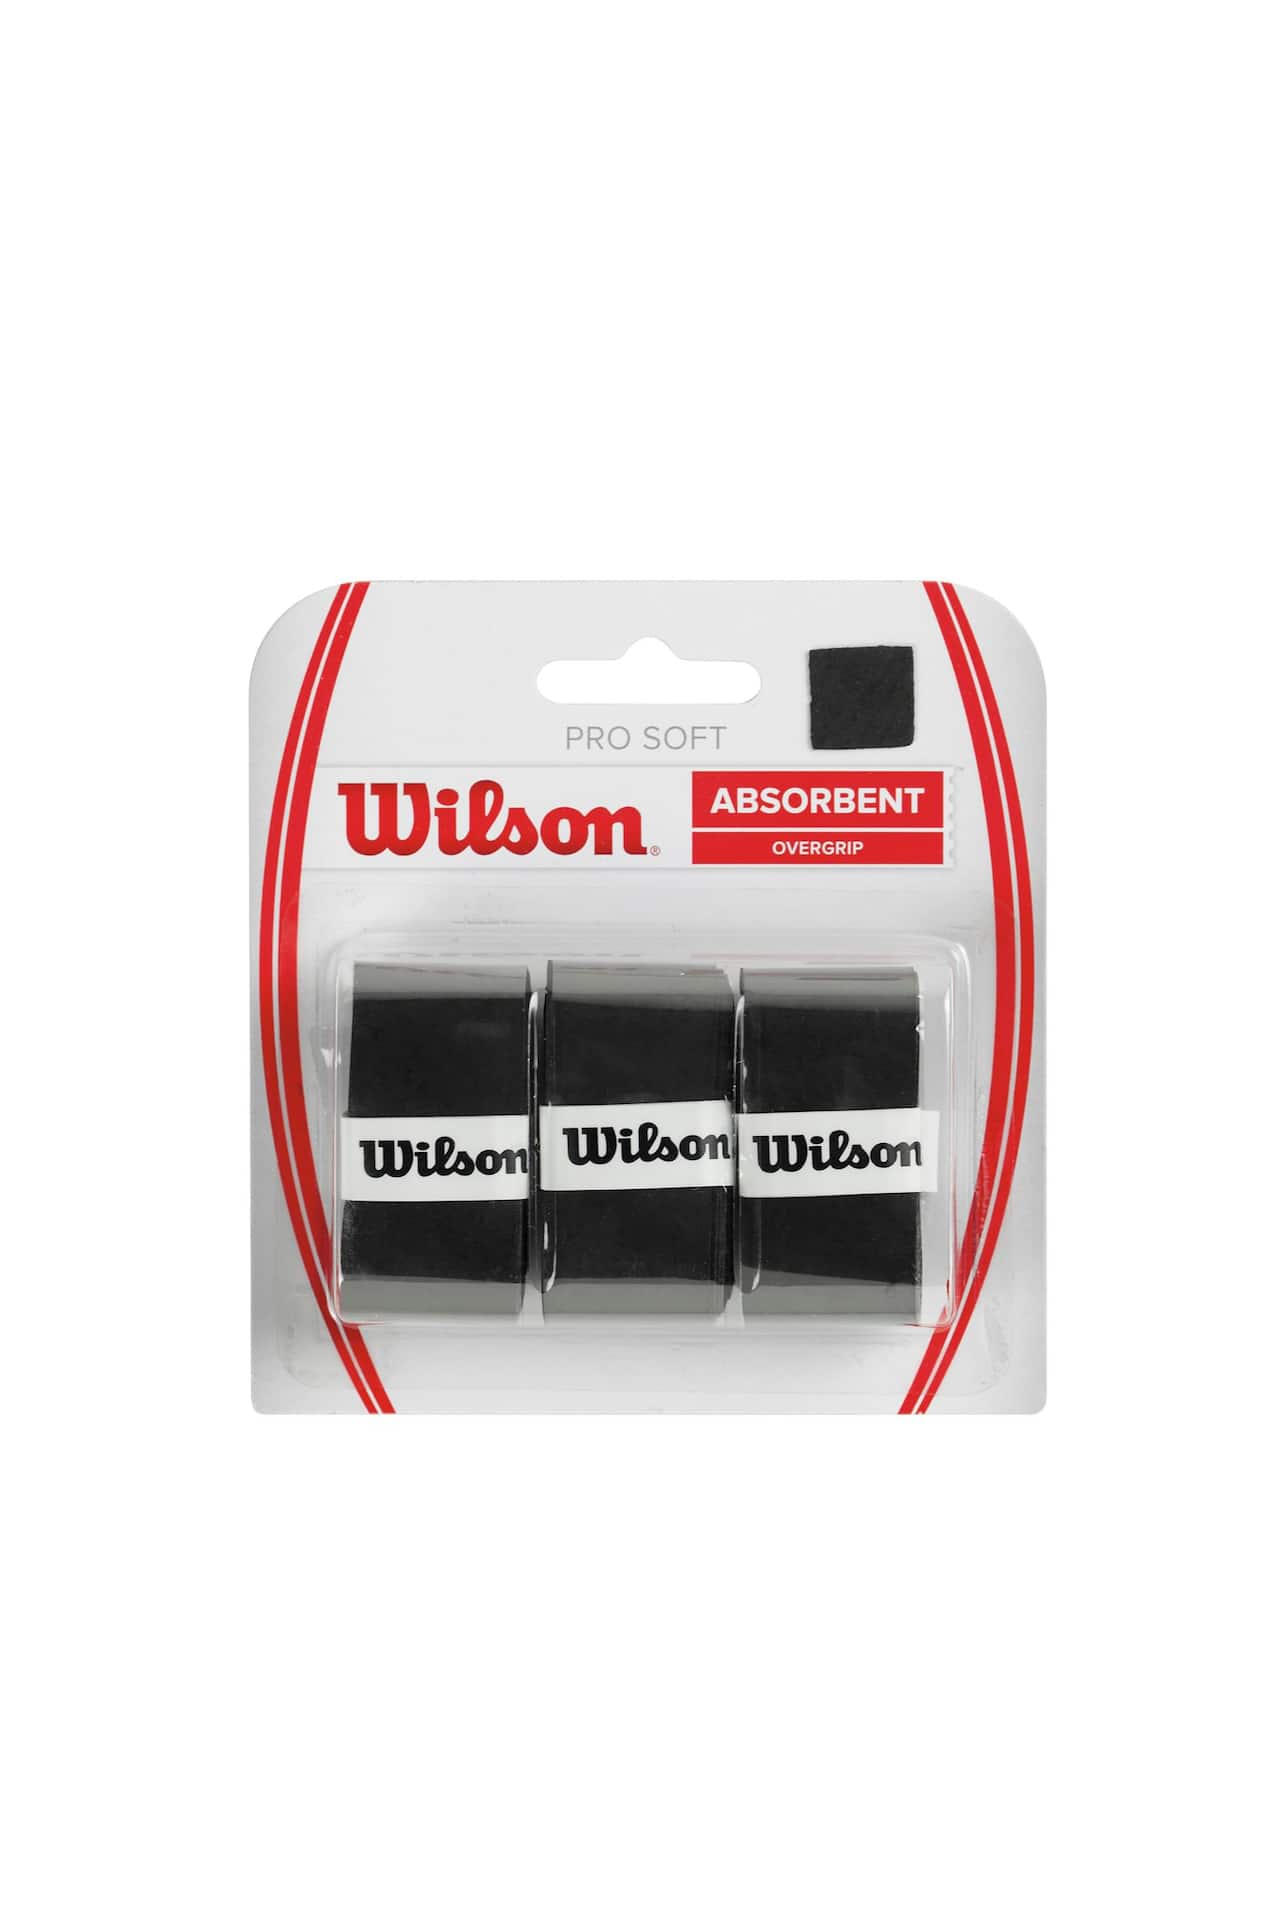 Wilson Cushion Aire Classic Sponge Comfort Overgrip Racquet/Racket Sports  Grip Tape, Black